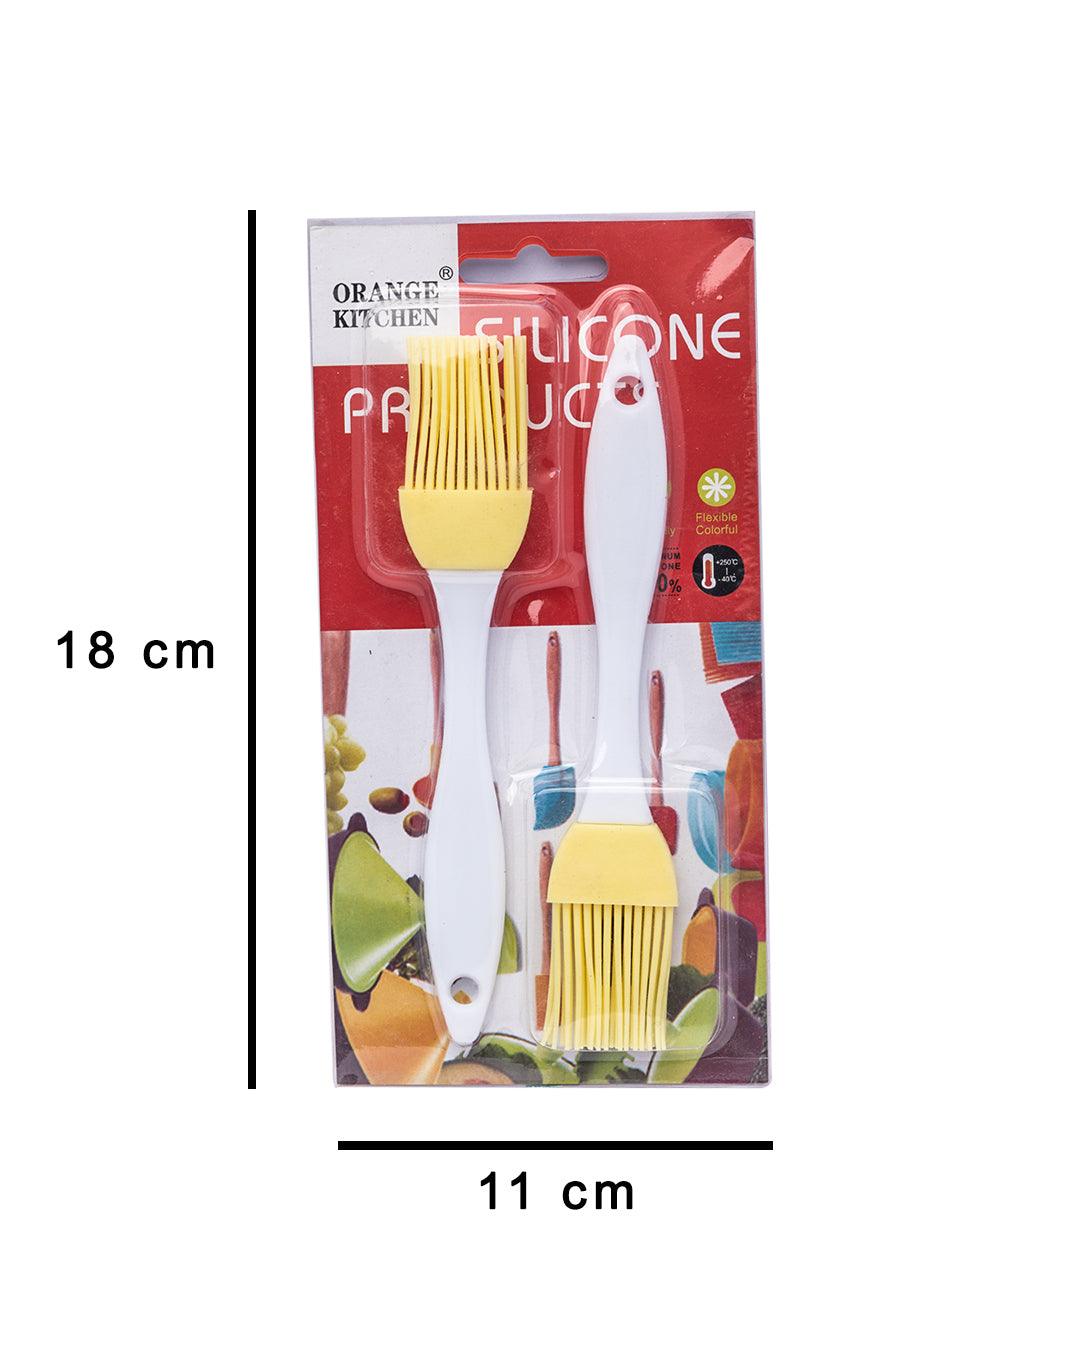 Oil Brush, Basting Brush, Pastry Brush for Cooking, Yellow, Plastic, Set of 2 - MARKET 99